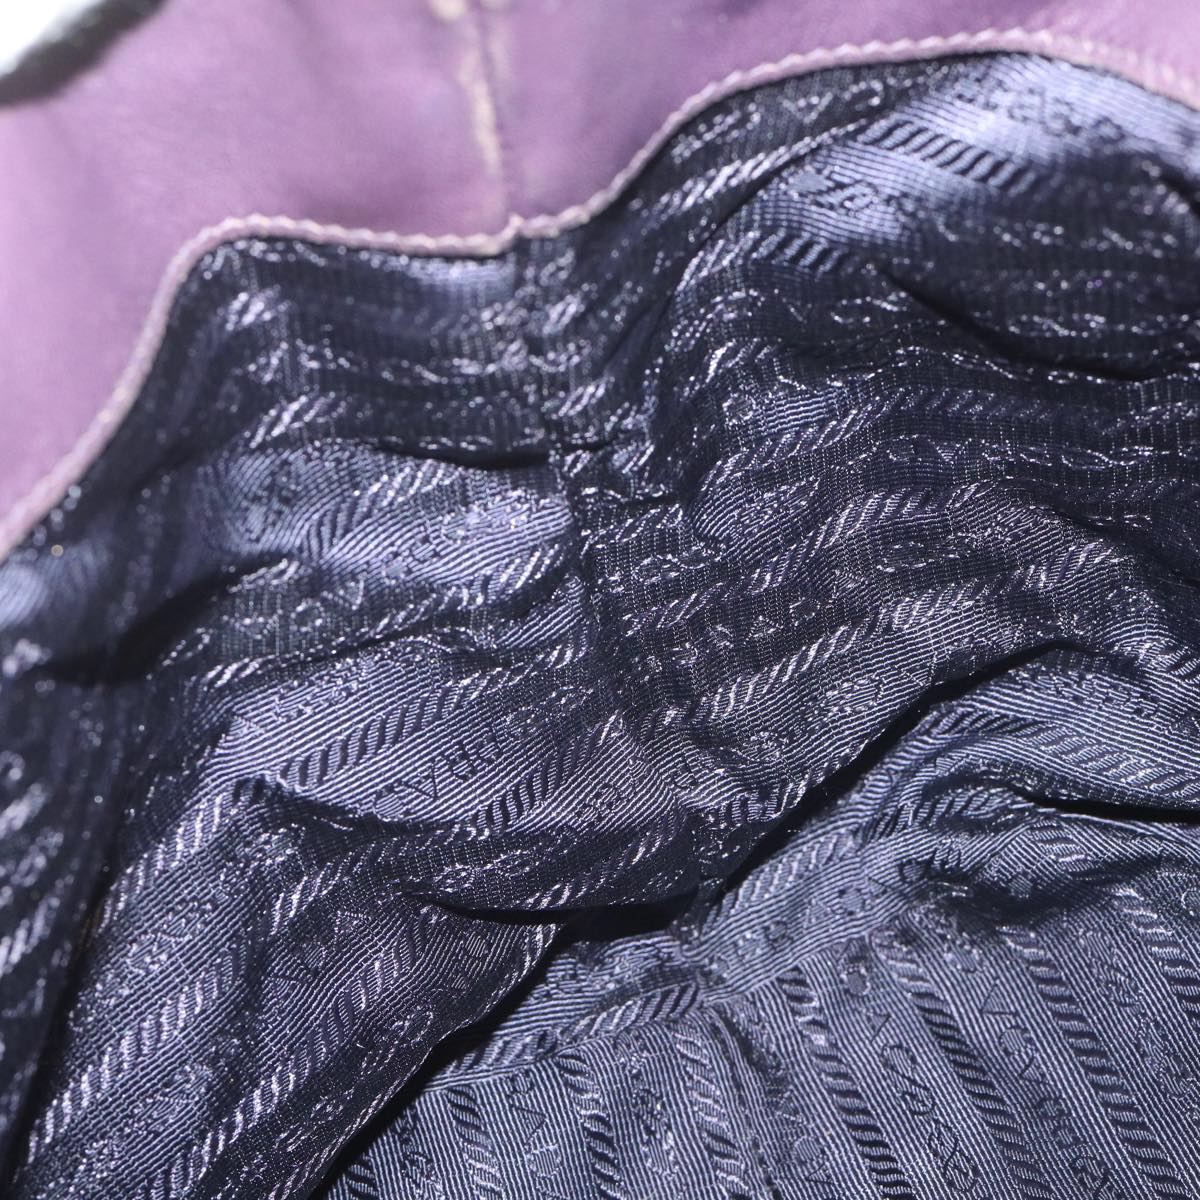 PRADA Hand Bag Nylon Purple Auth bs9971